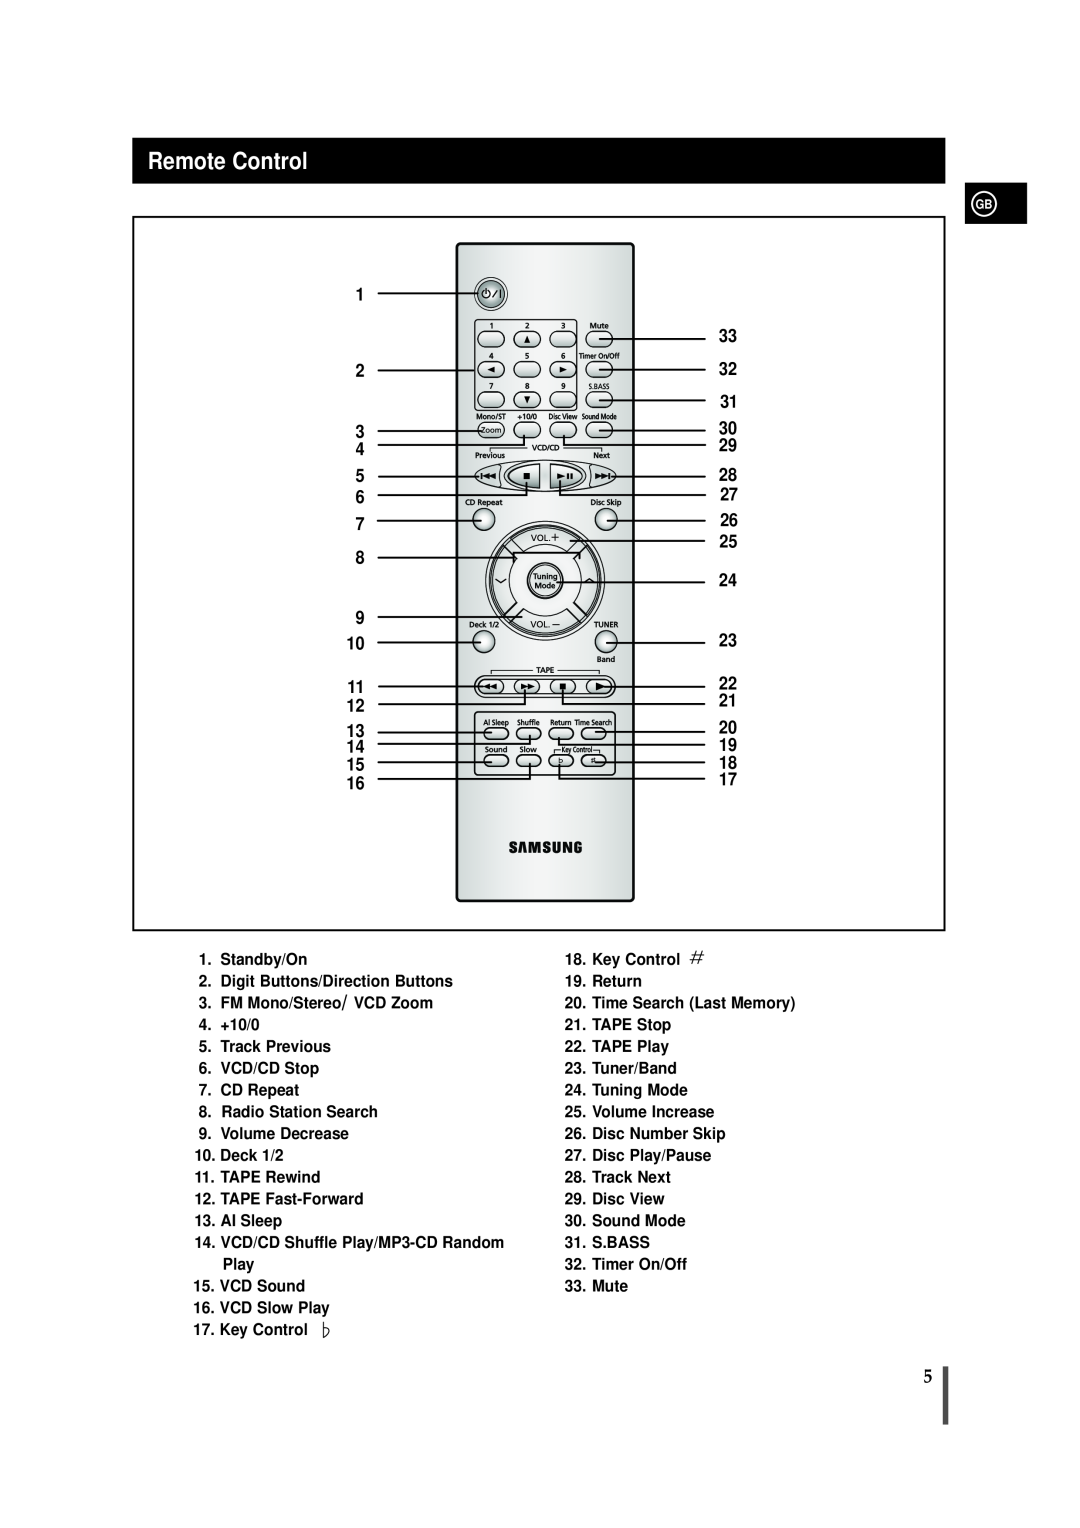 Samsung MAX-VB450 instruction manual Remote Control 